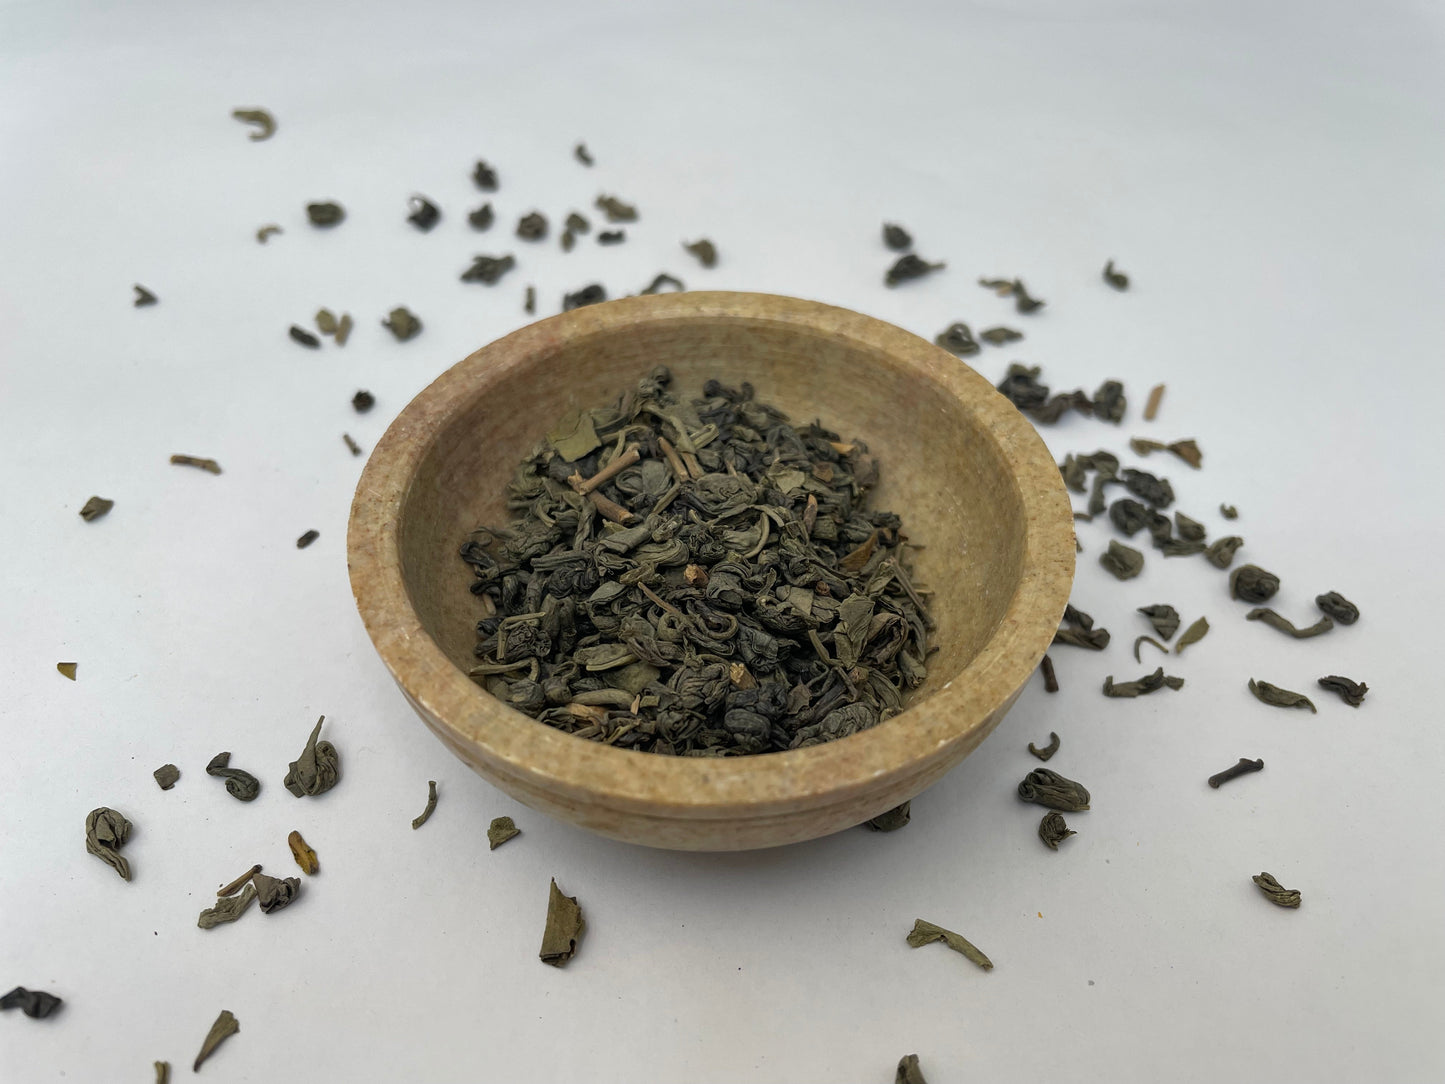 Green Tea Herb - Camellia sinensis (leaf)